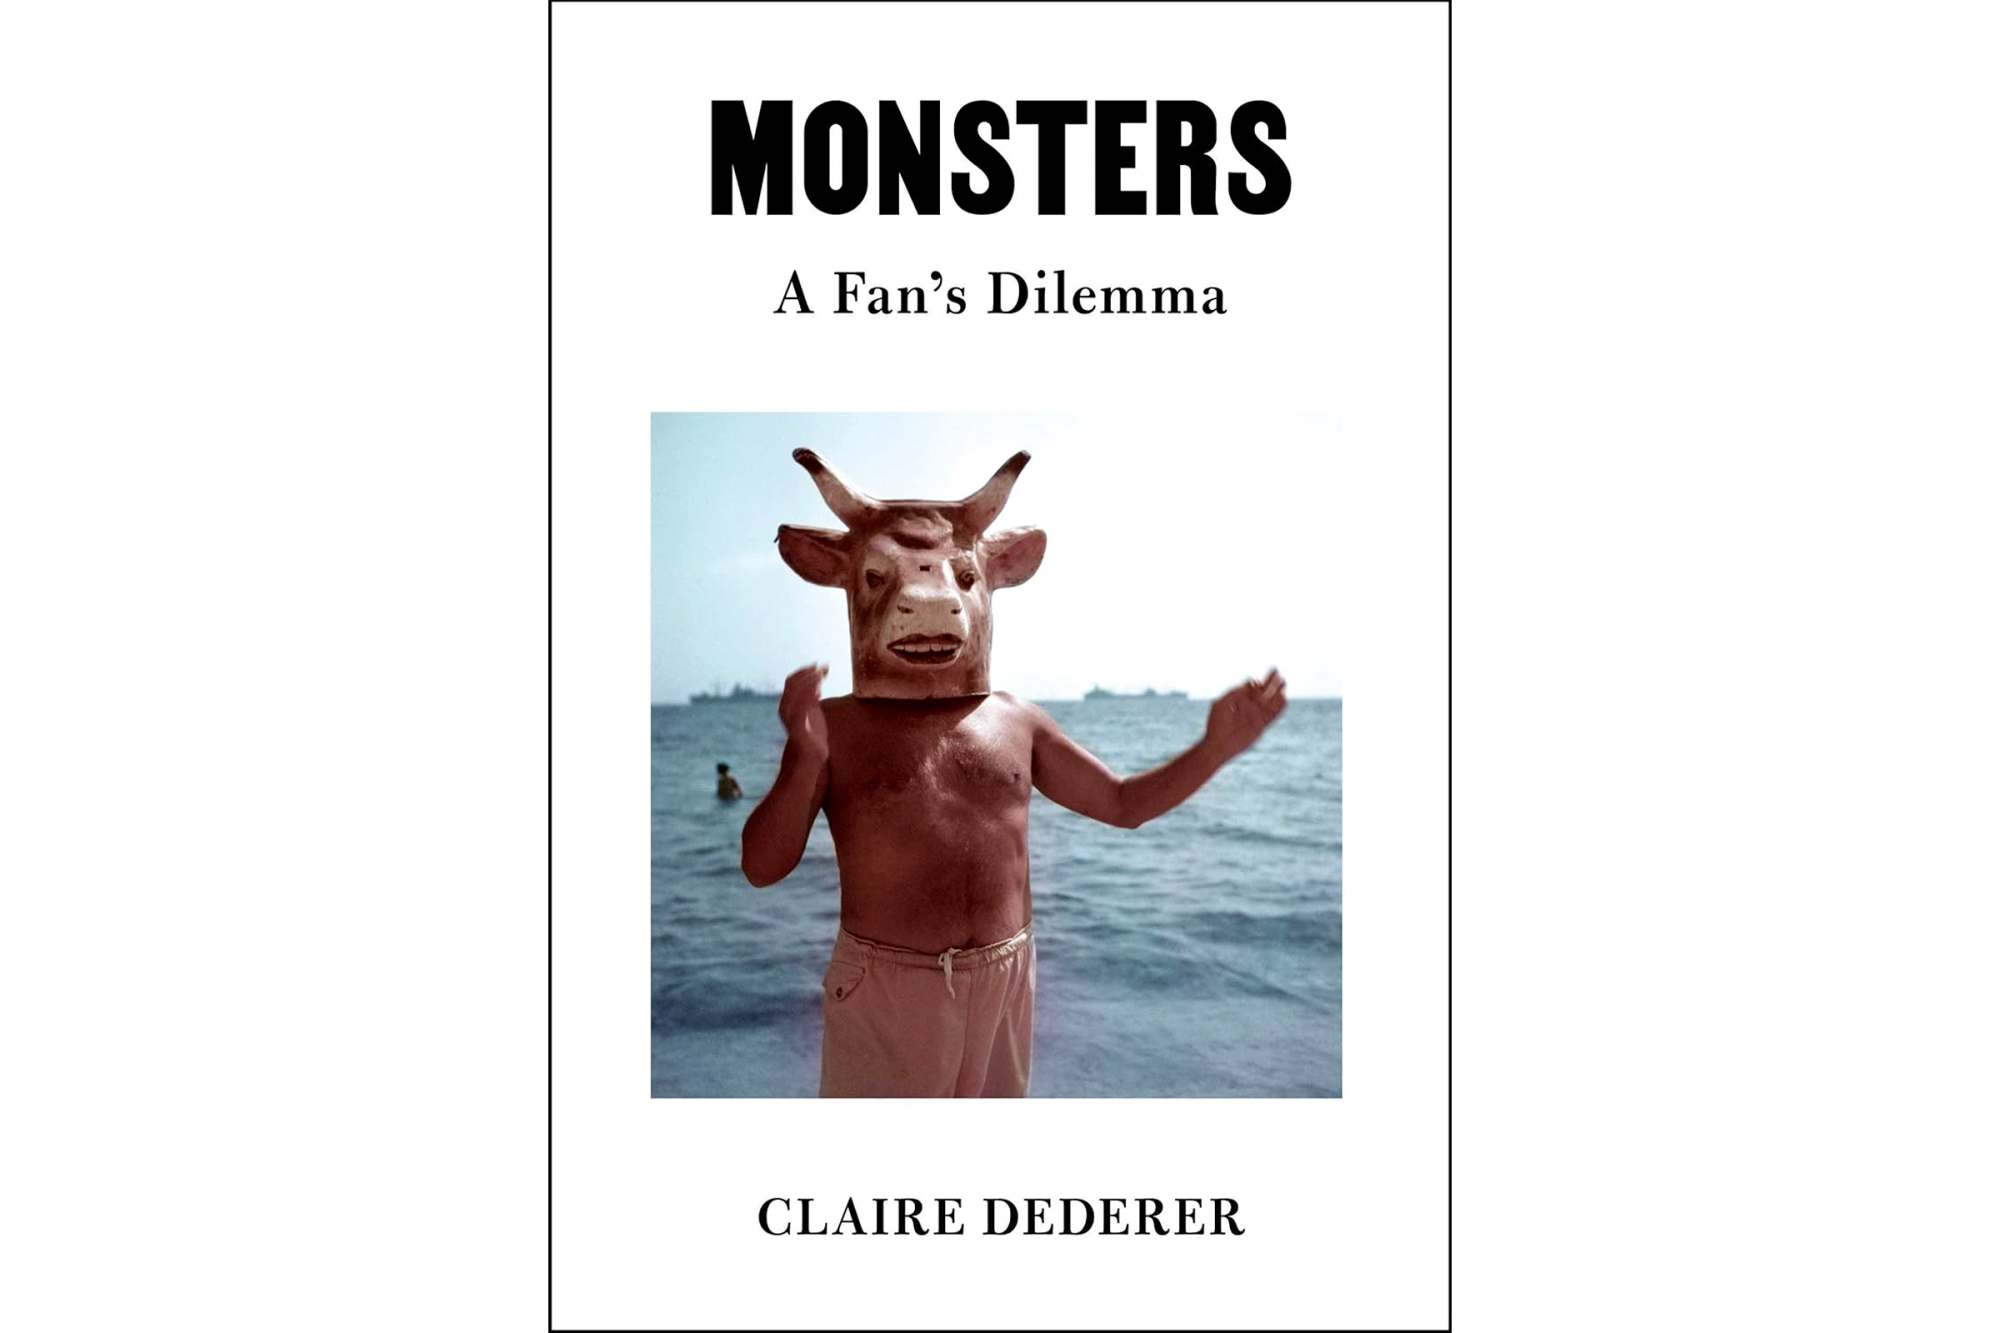 "Monsters: A Fan's Dilemma" by Claire Dederer